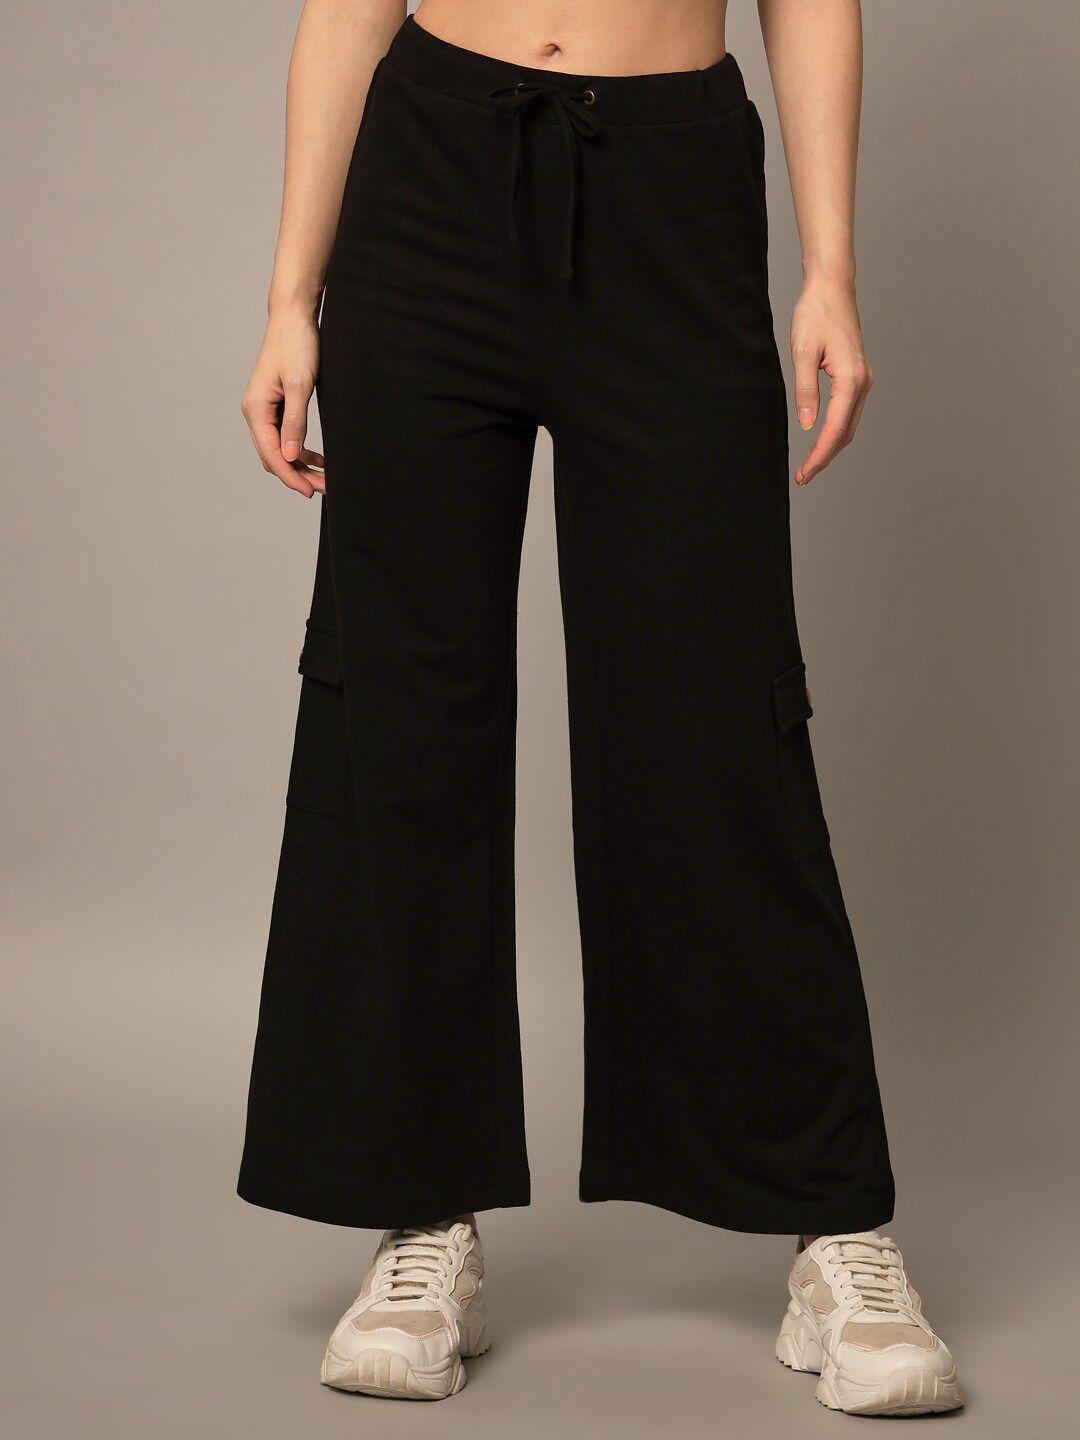 yaadleen women black solid cotton track pants